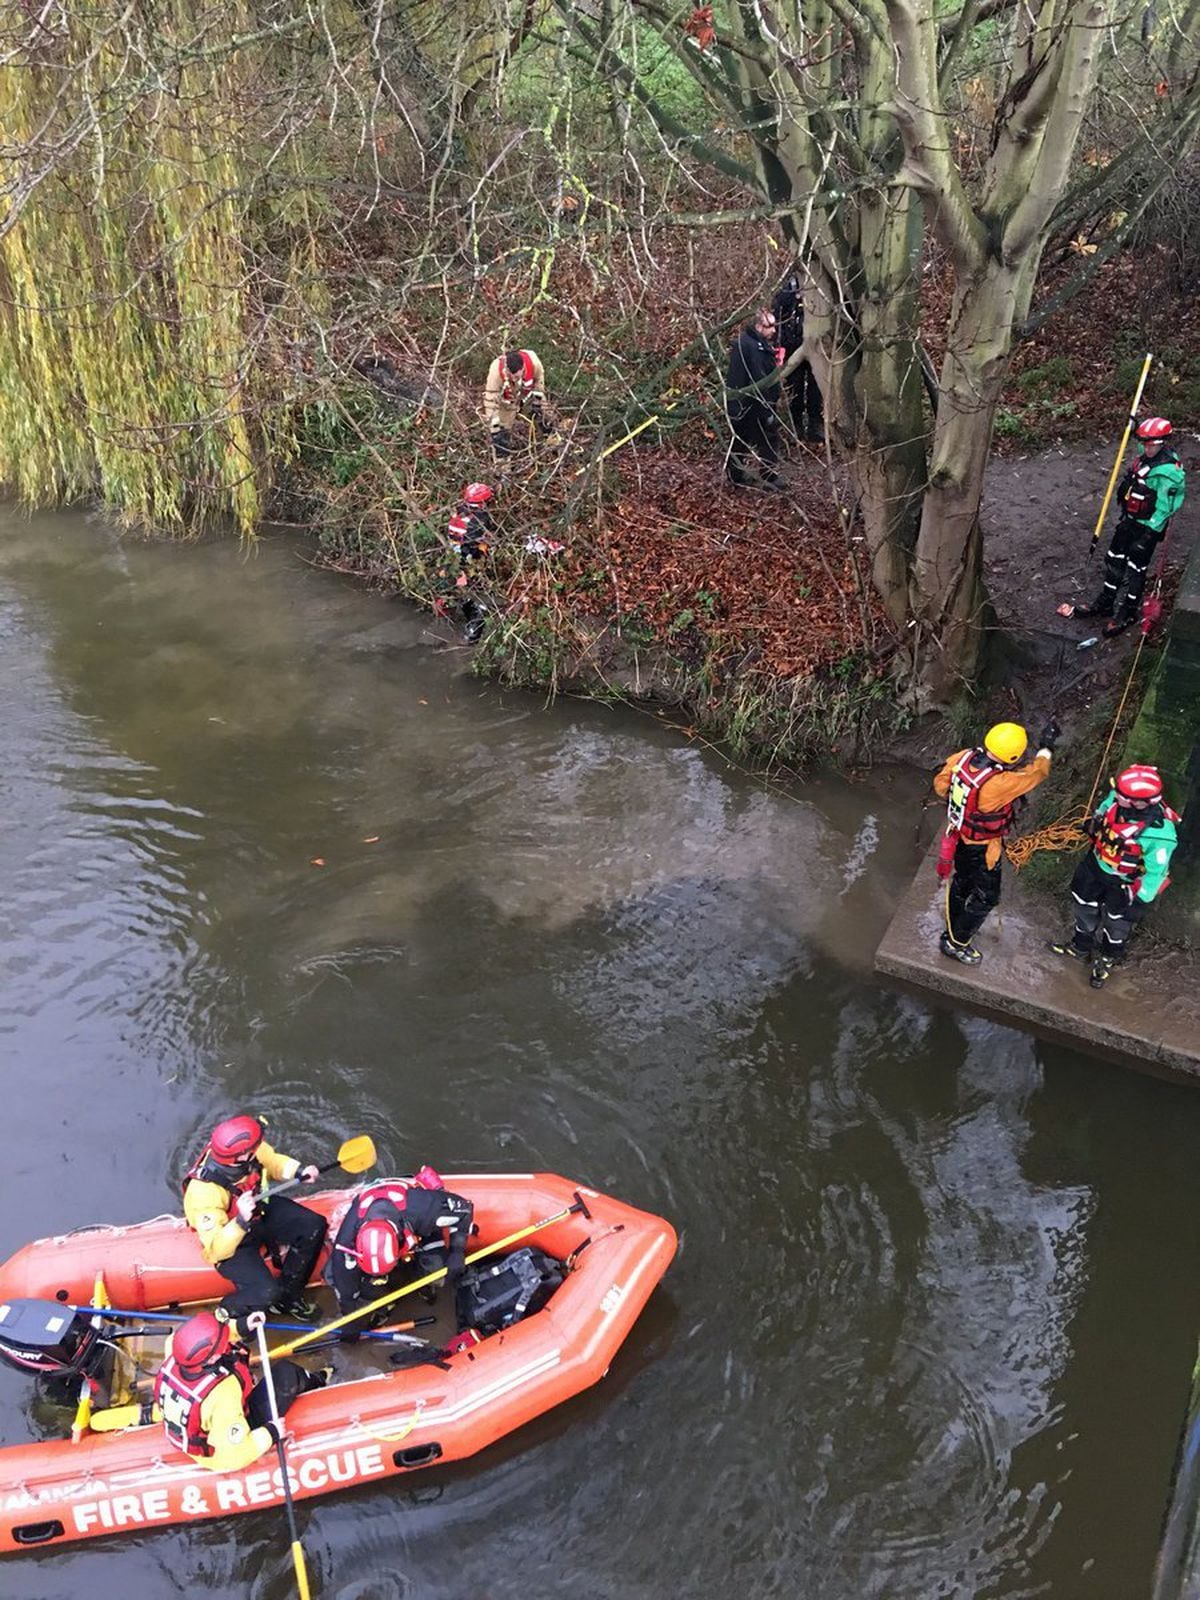 Search crews in the River Severn on Saturday. Photo: Hugh Mainwaring